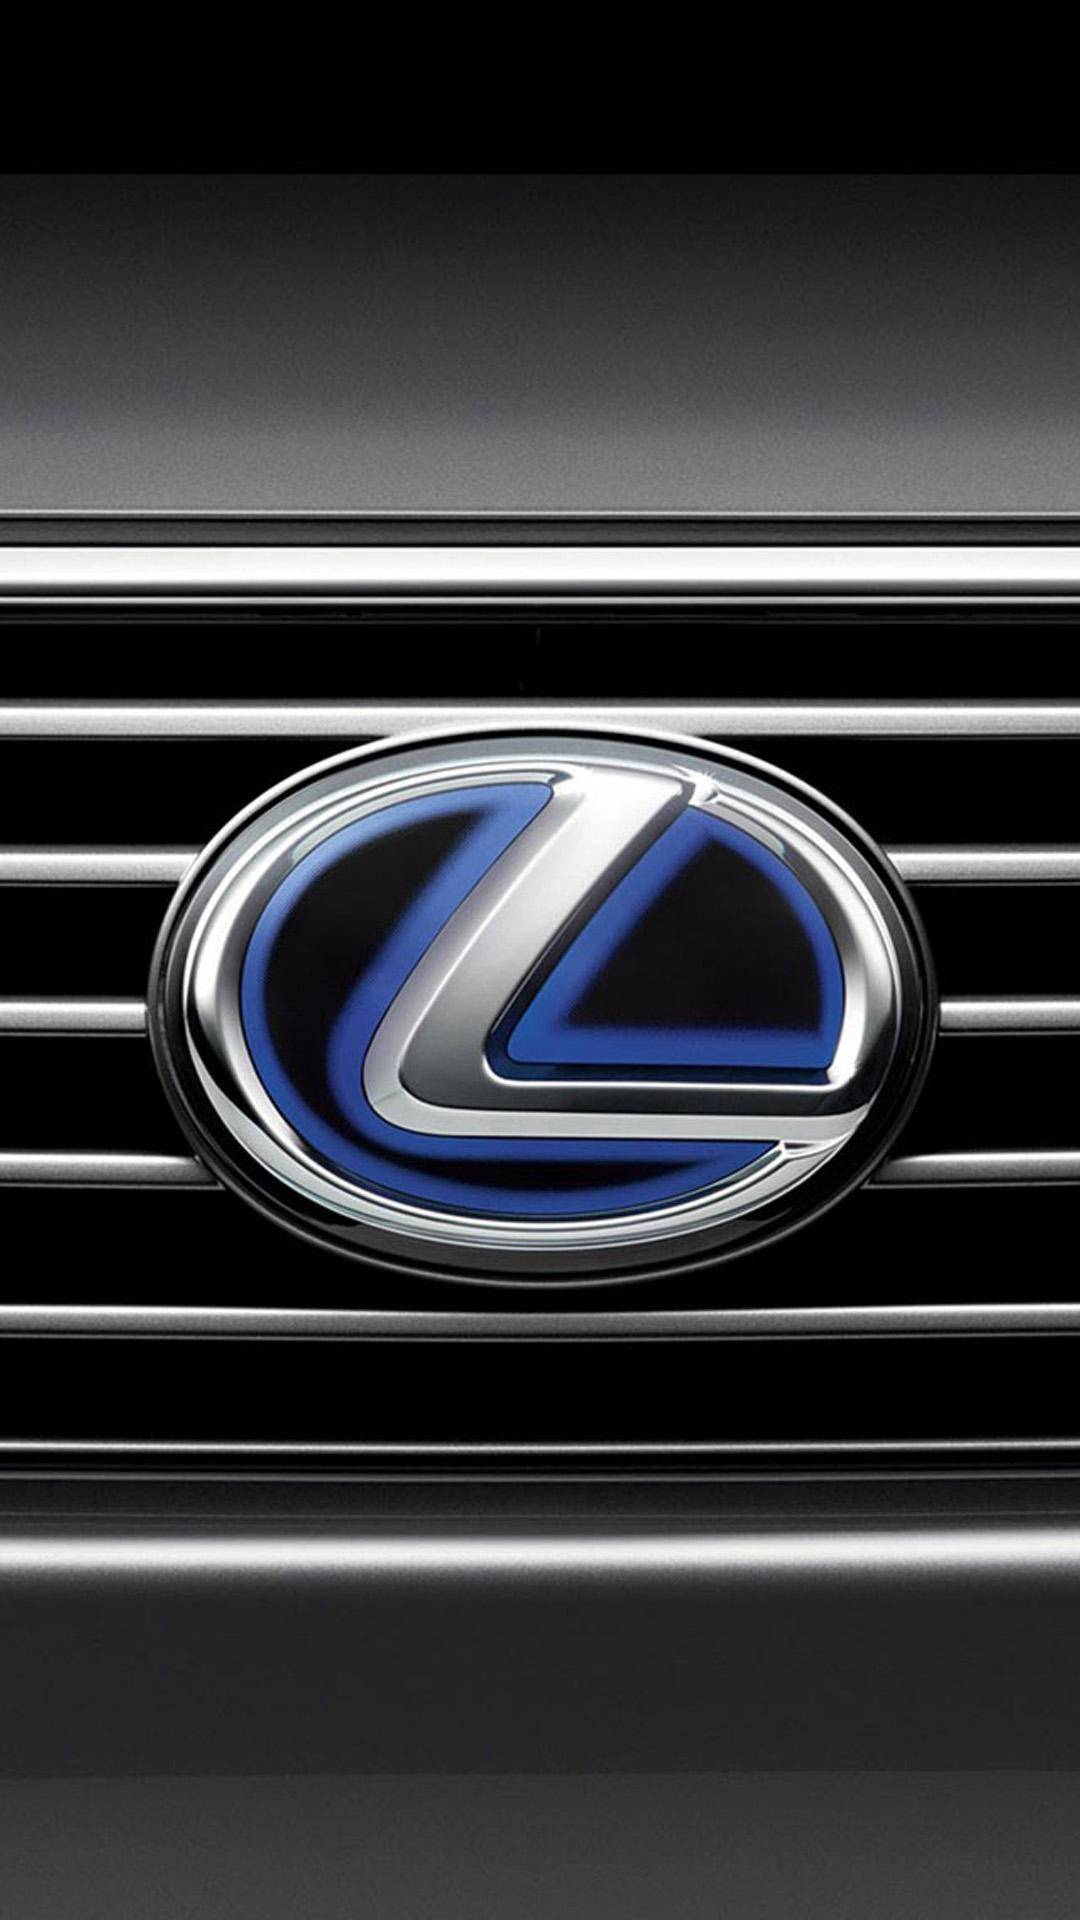 Lexus Emblem Iphone Wallpaper